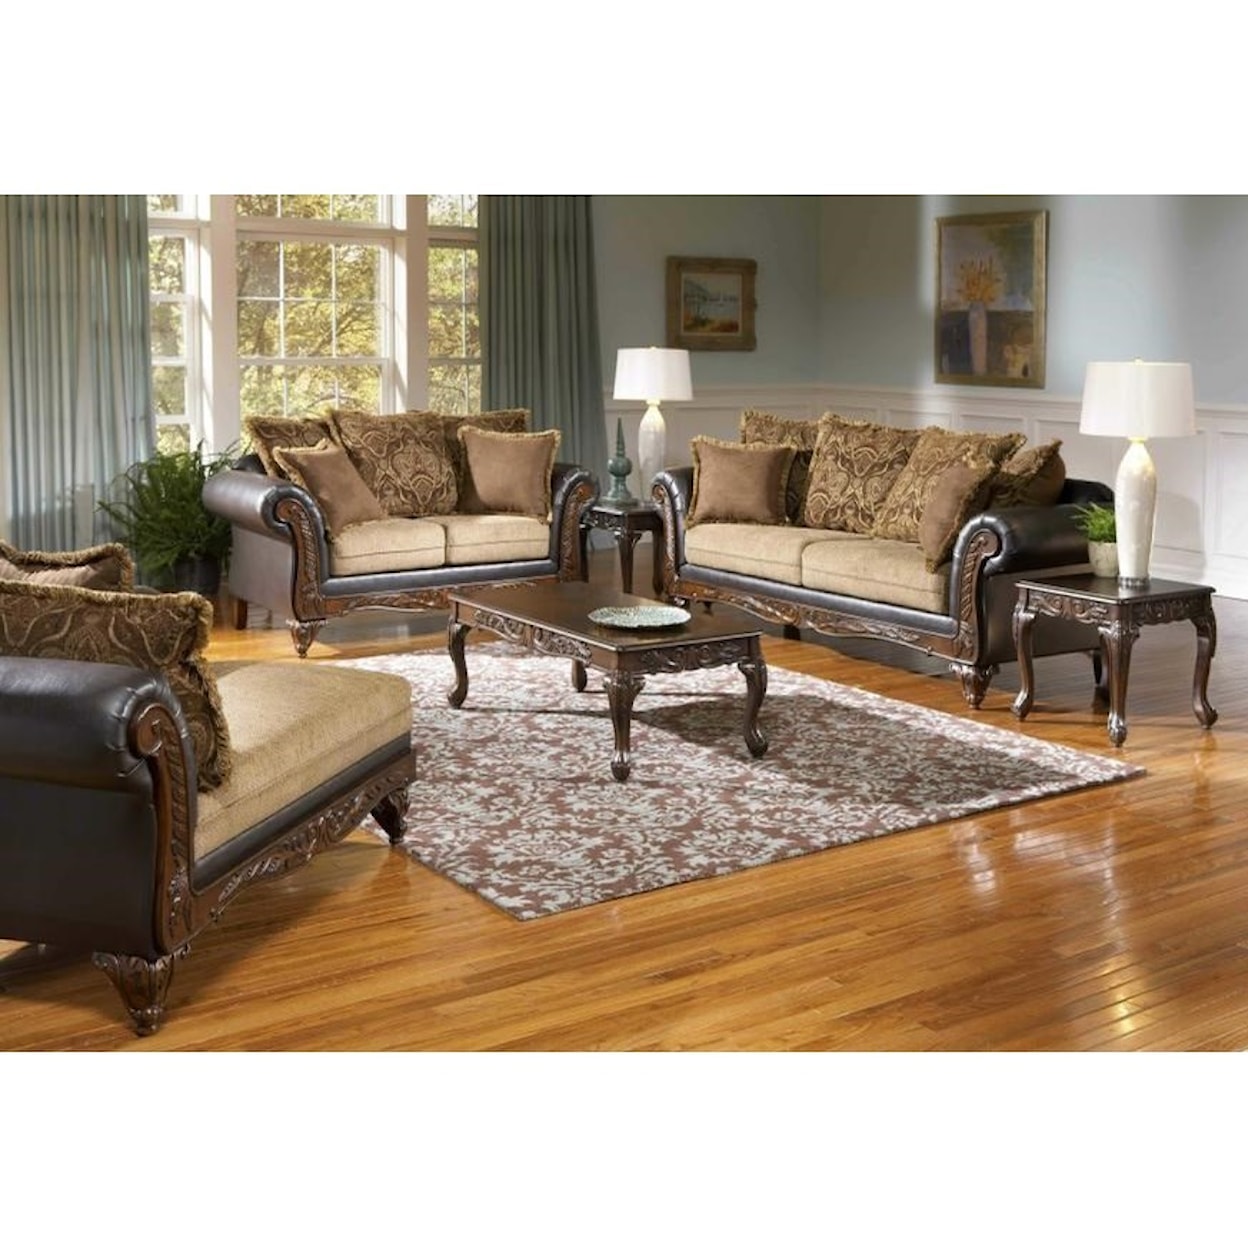 Serta Upholstery by Hughes Furniture 7900 Serta Upholstered Love Seat